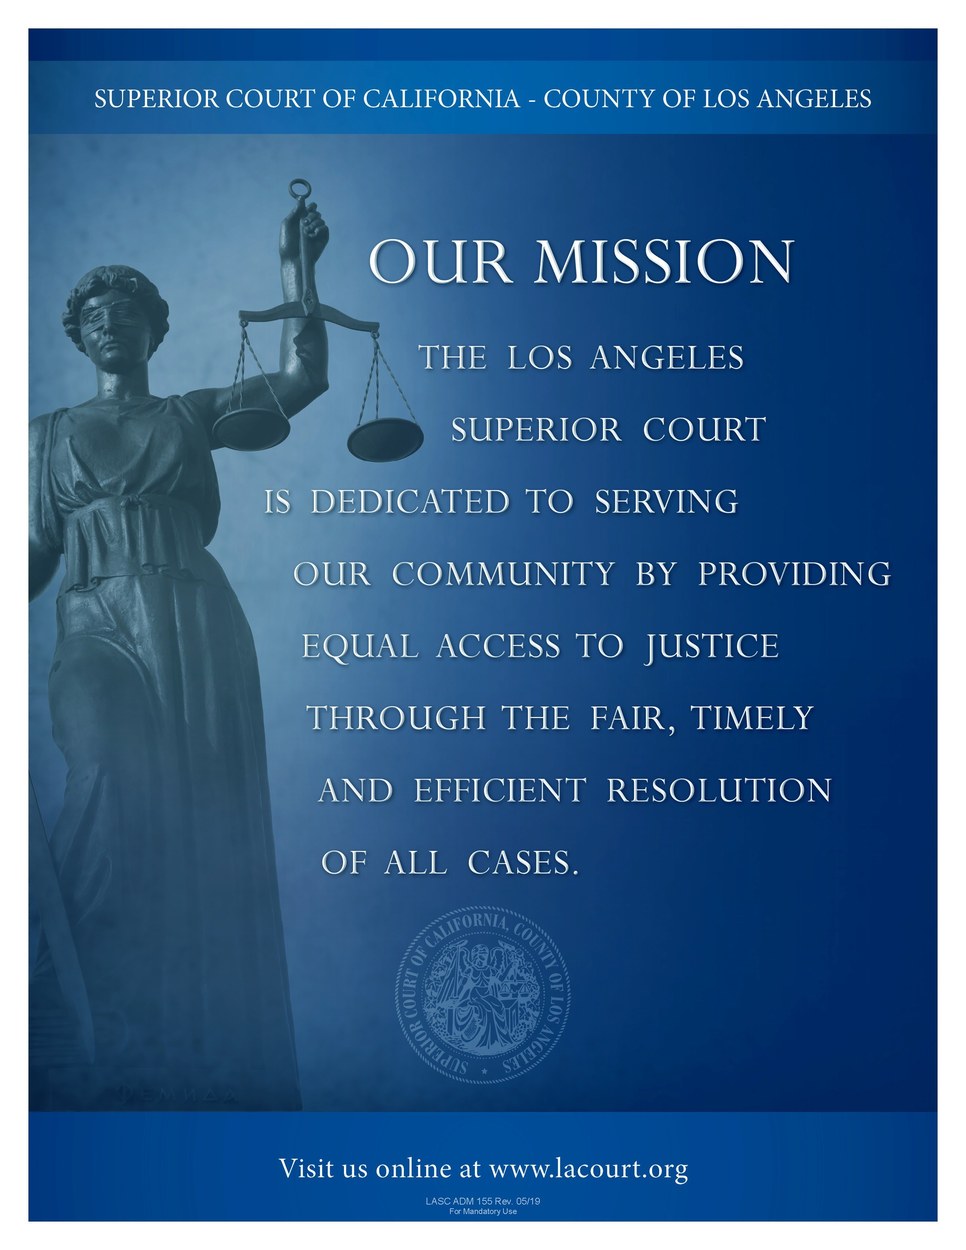 Los Angeles Superior Court - Mission Statement Poster